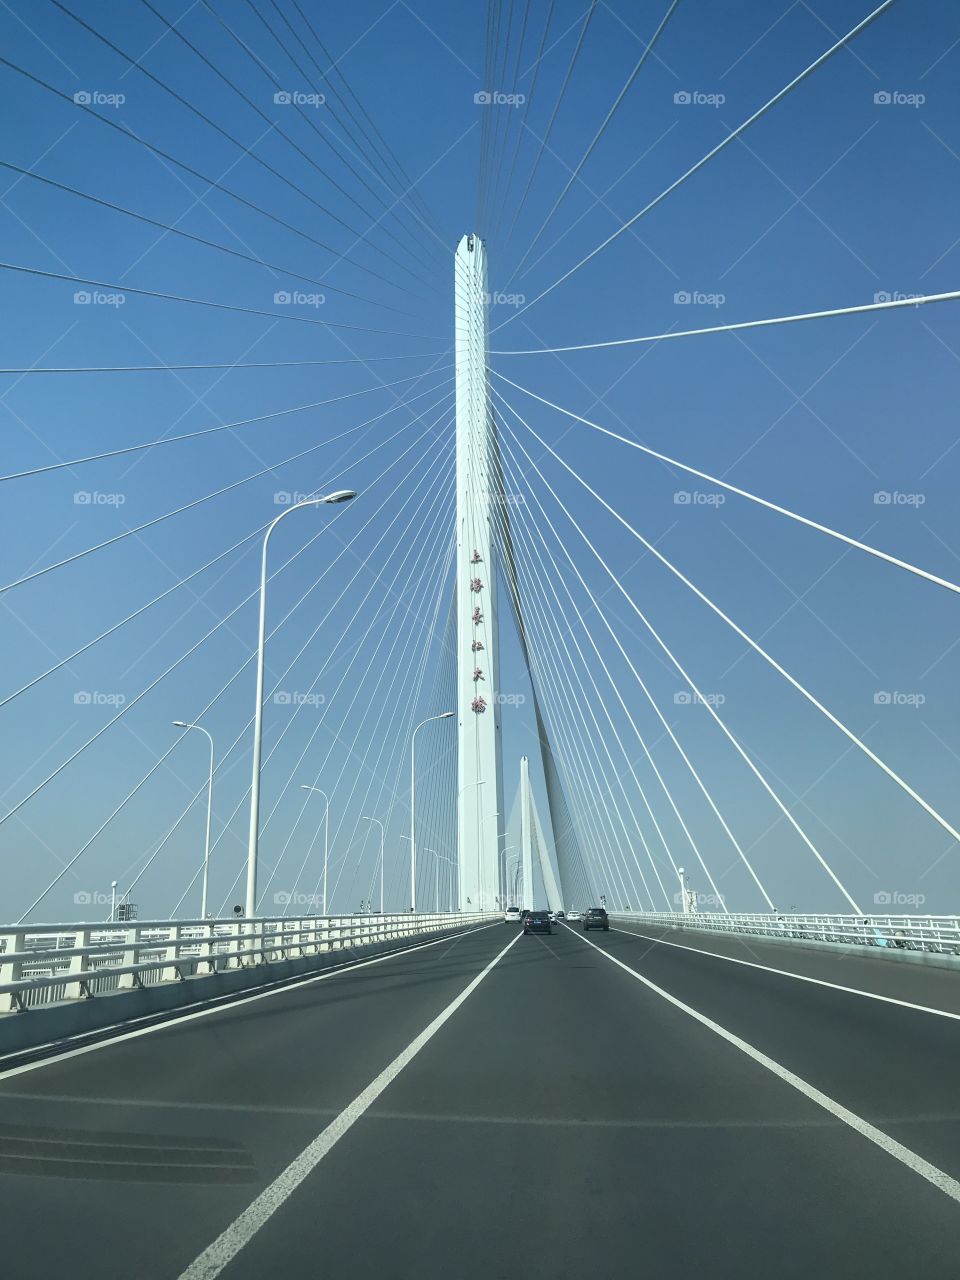 Fancy high tech bridge near Shanghai - on the way to Chongming Island 